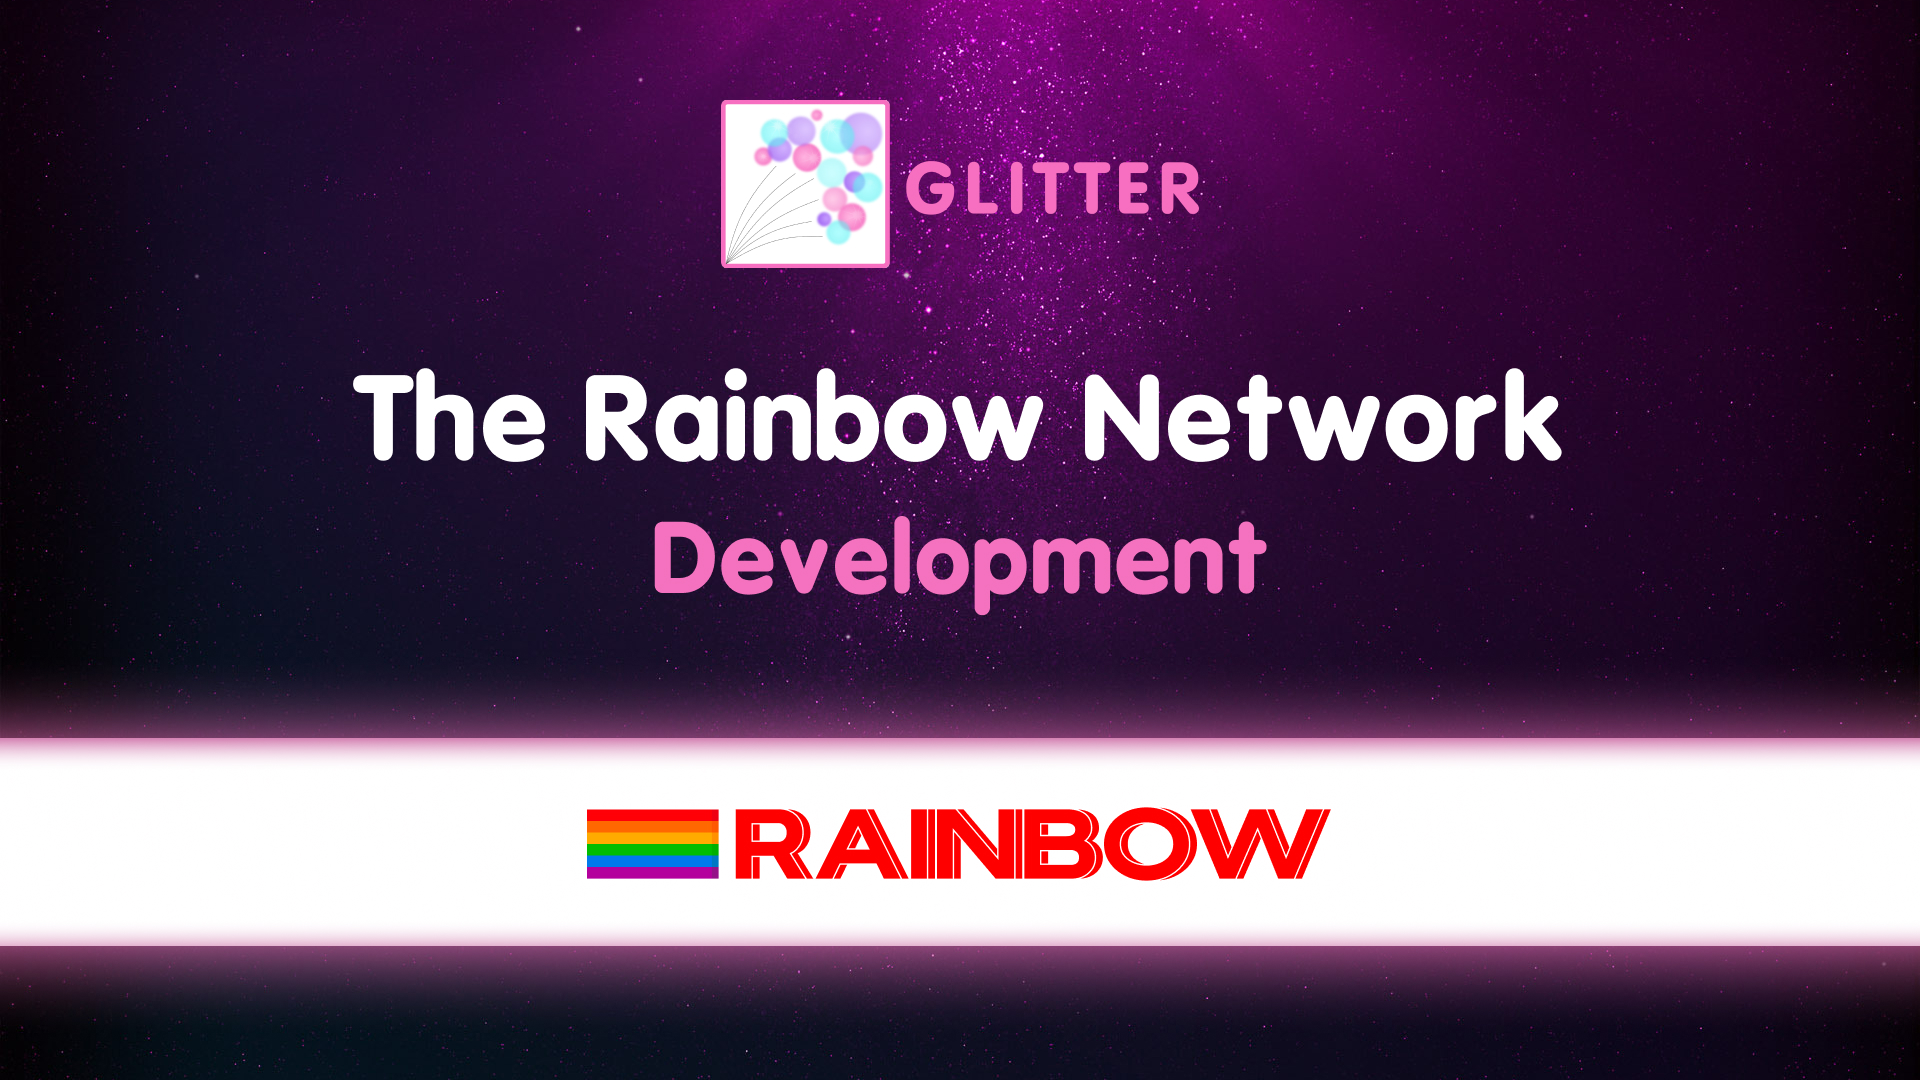 The Rainbow Network development image